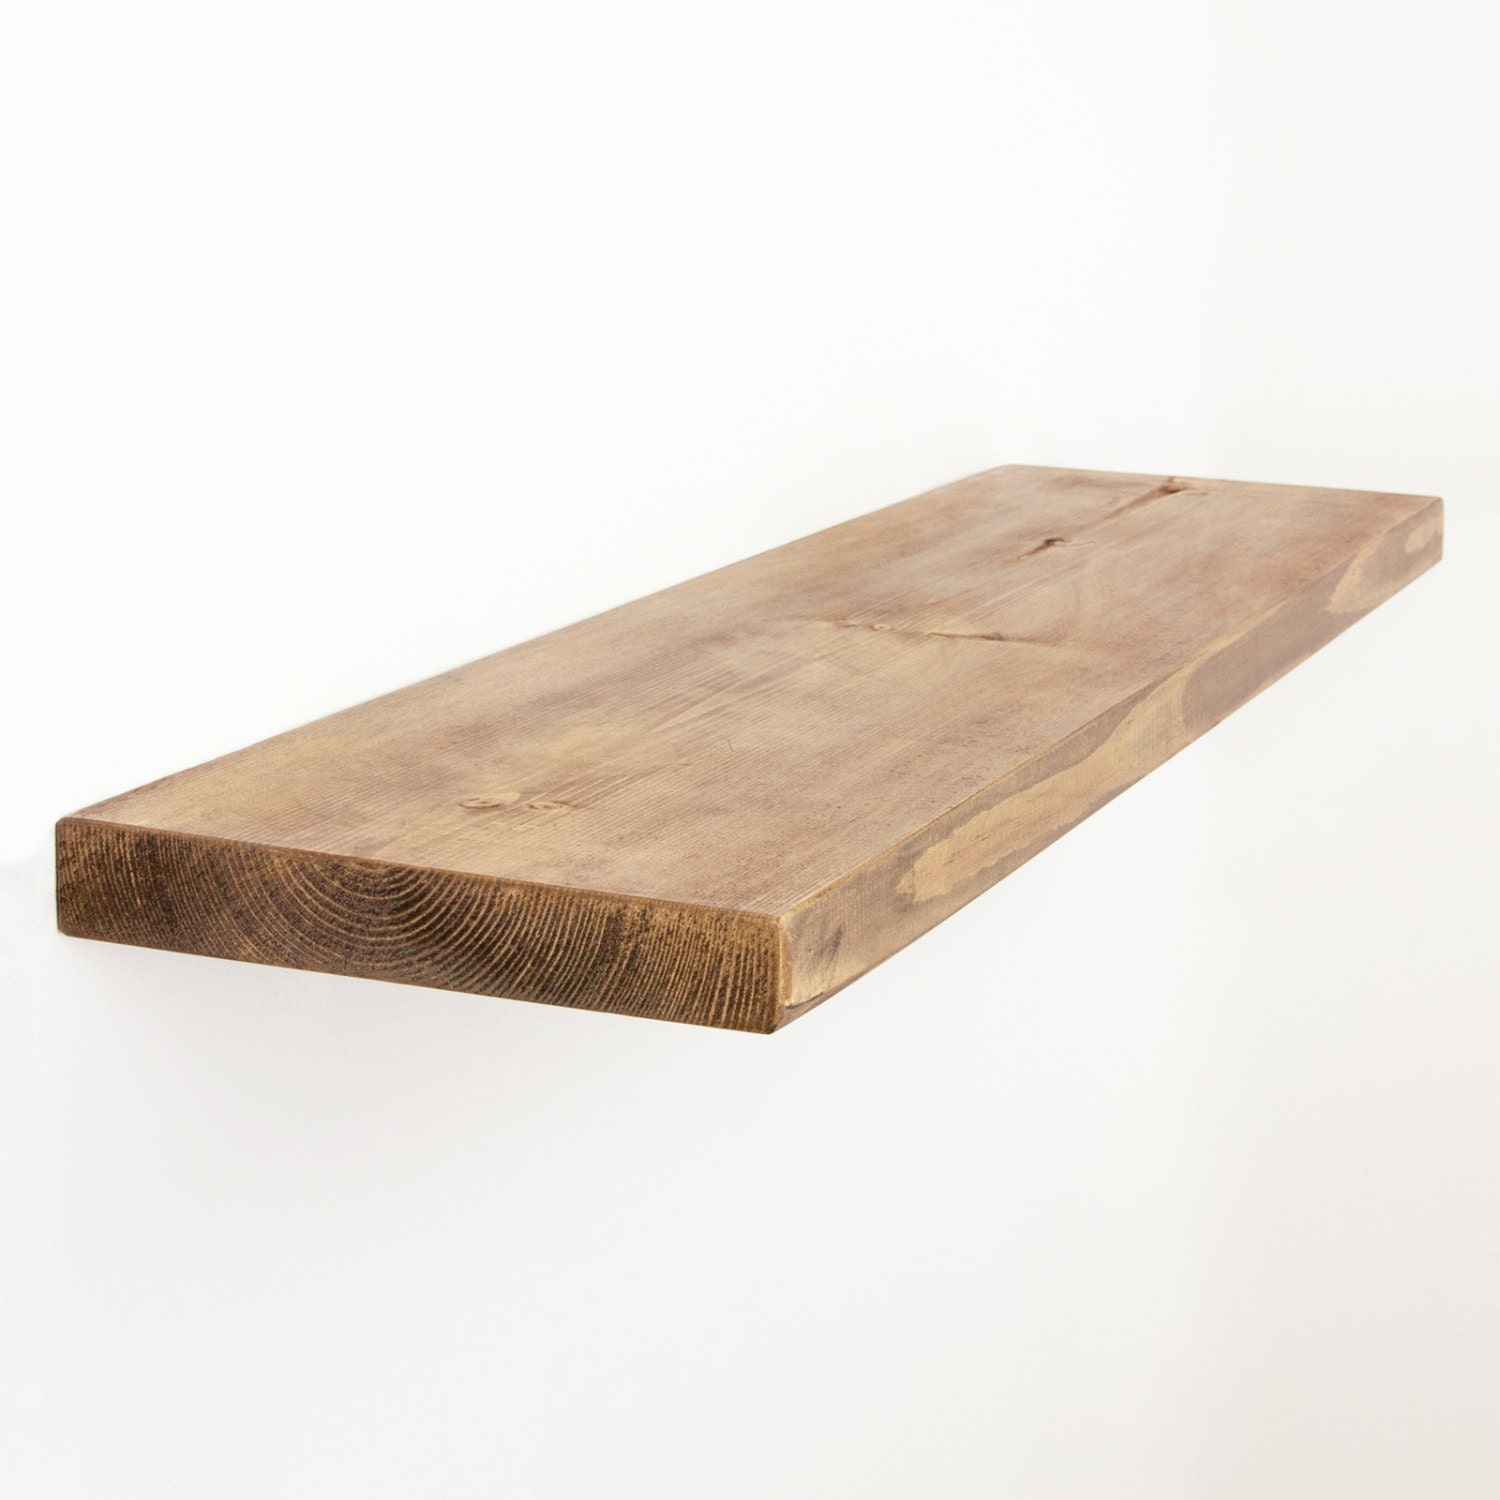 Rustic Floating Shelf Wood Solid Chunky Handmade with Brackets 9x1.5 